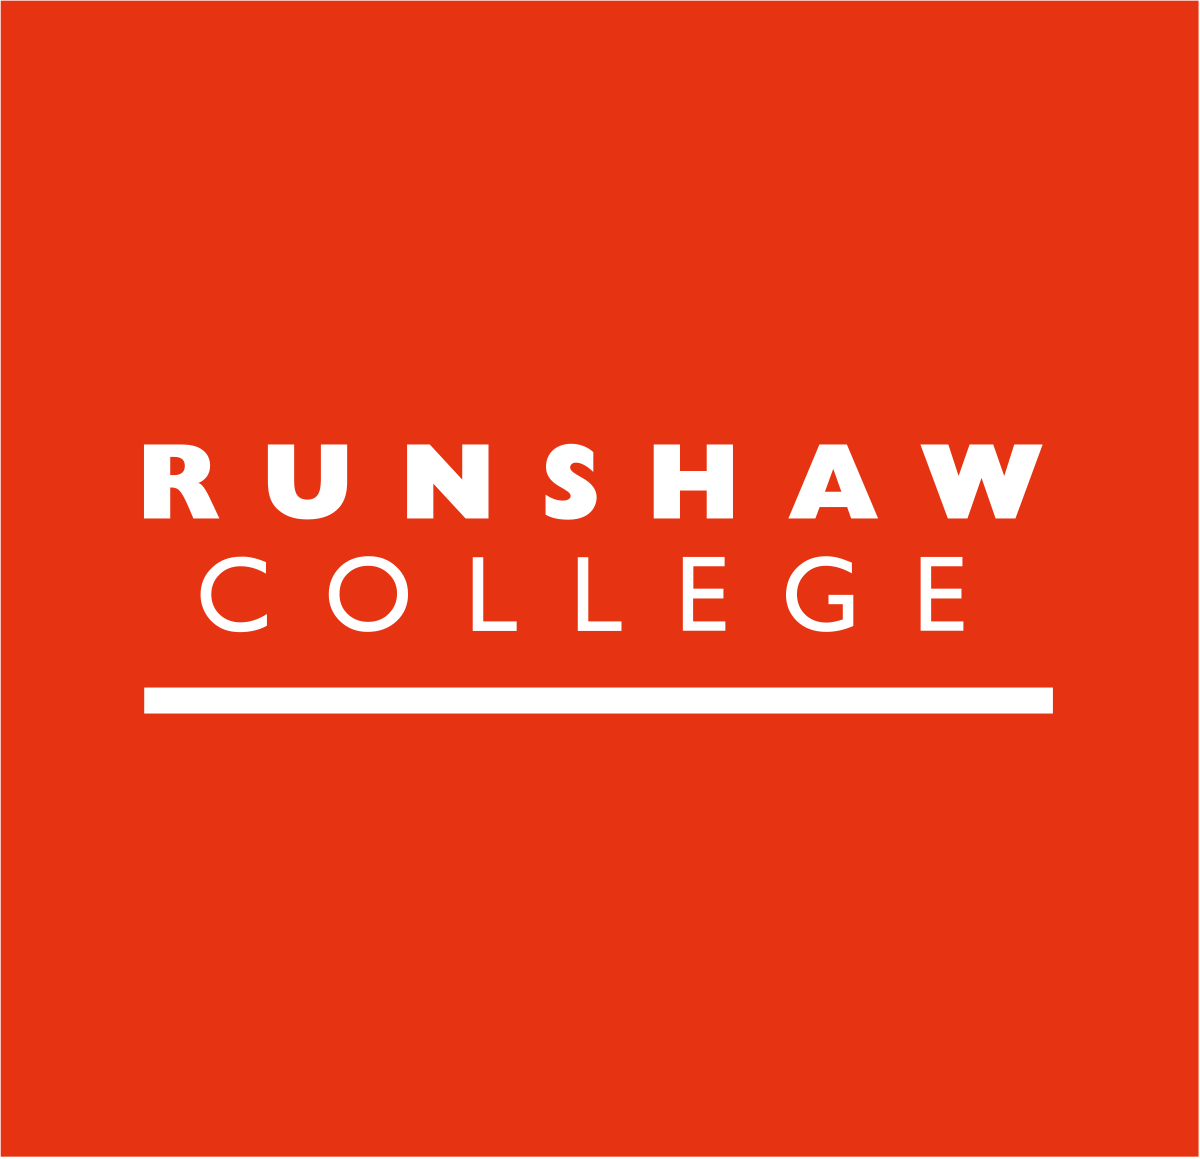 Runshaw College - Wikipedia